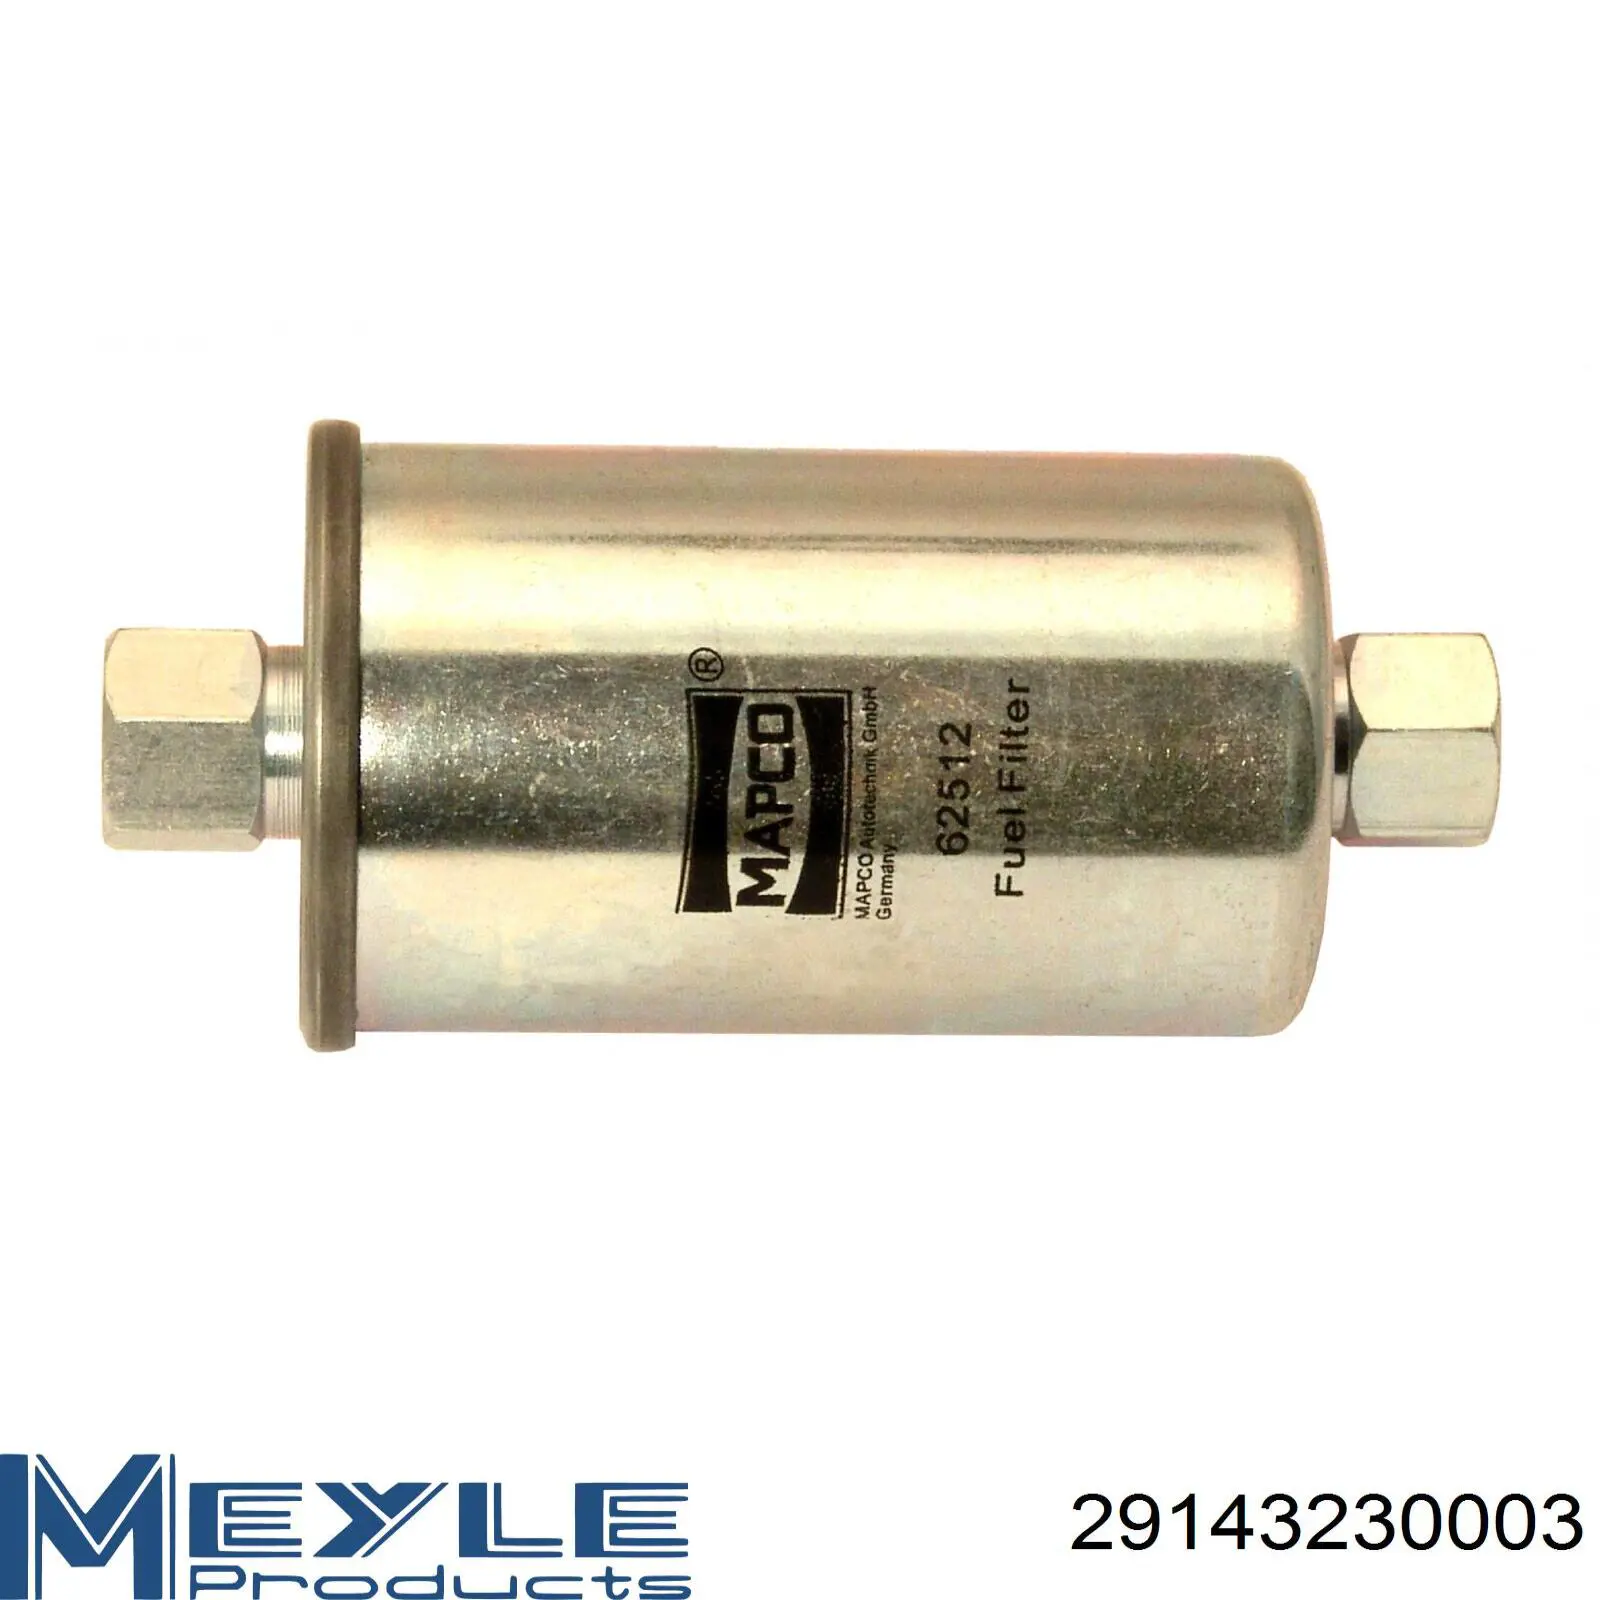 EFF518020 Open Parts filtro combustible